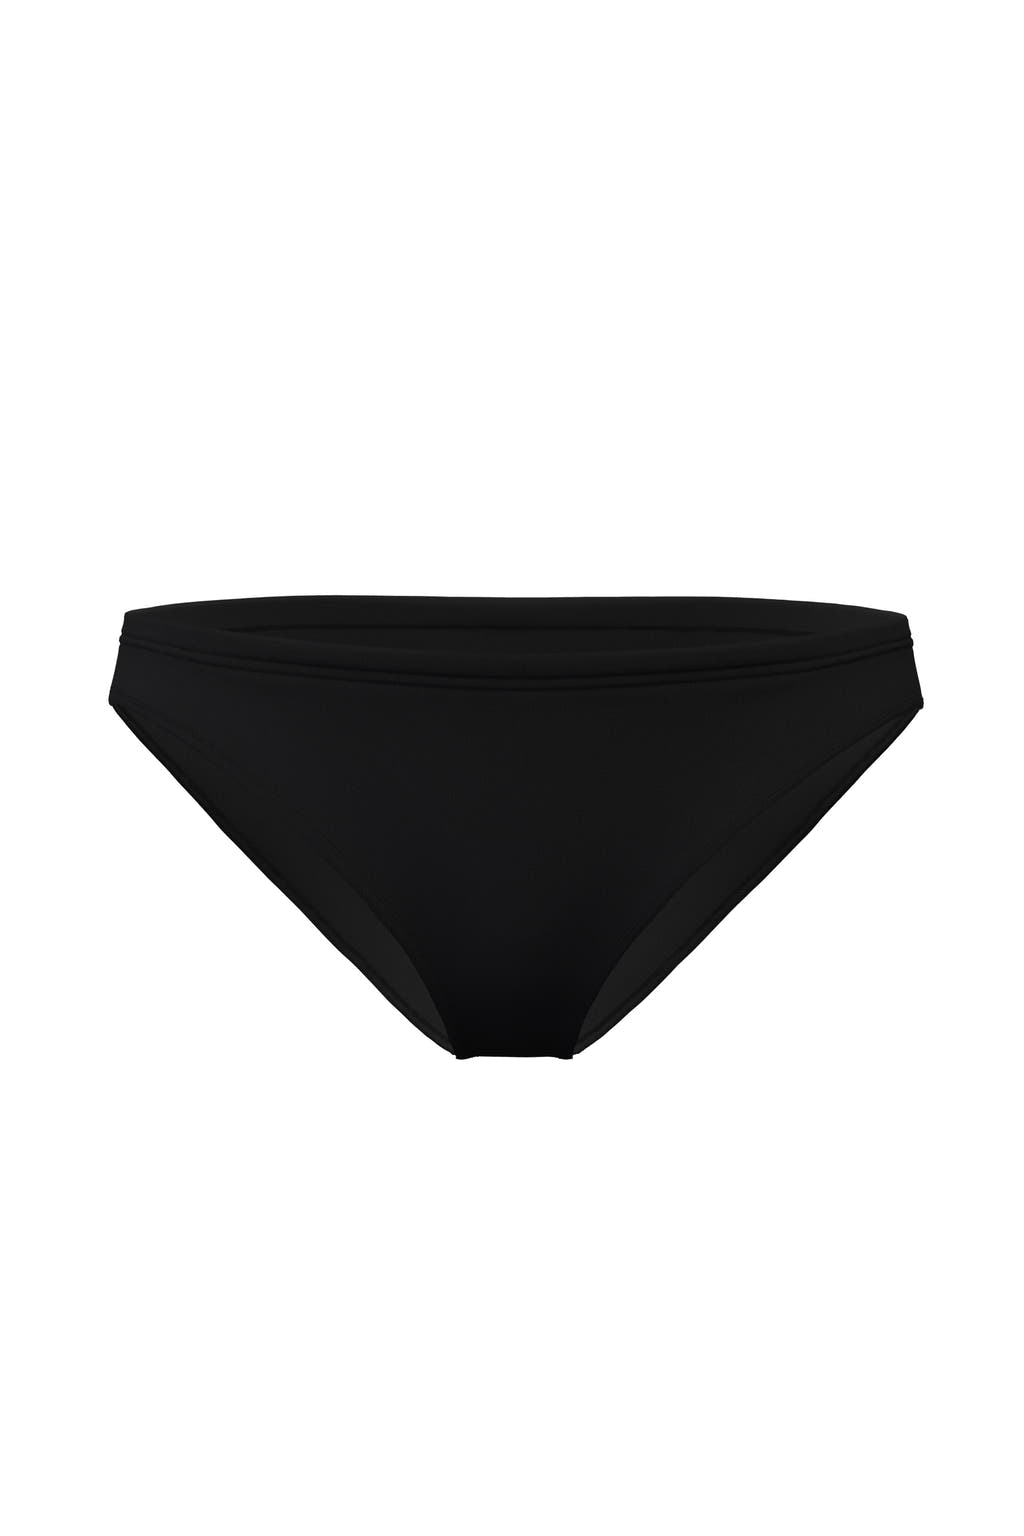 bikini undies in black